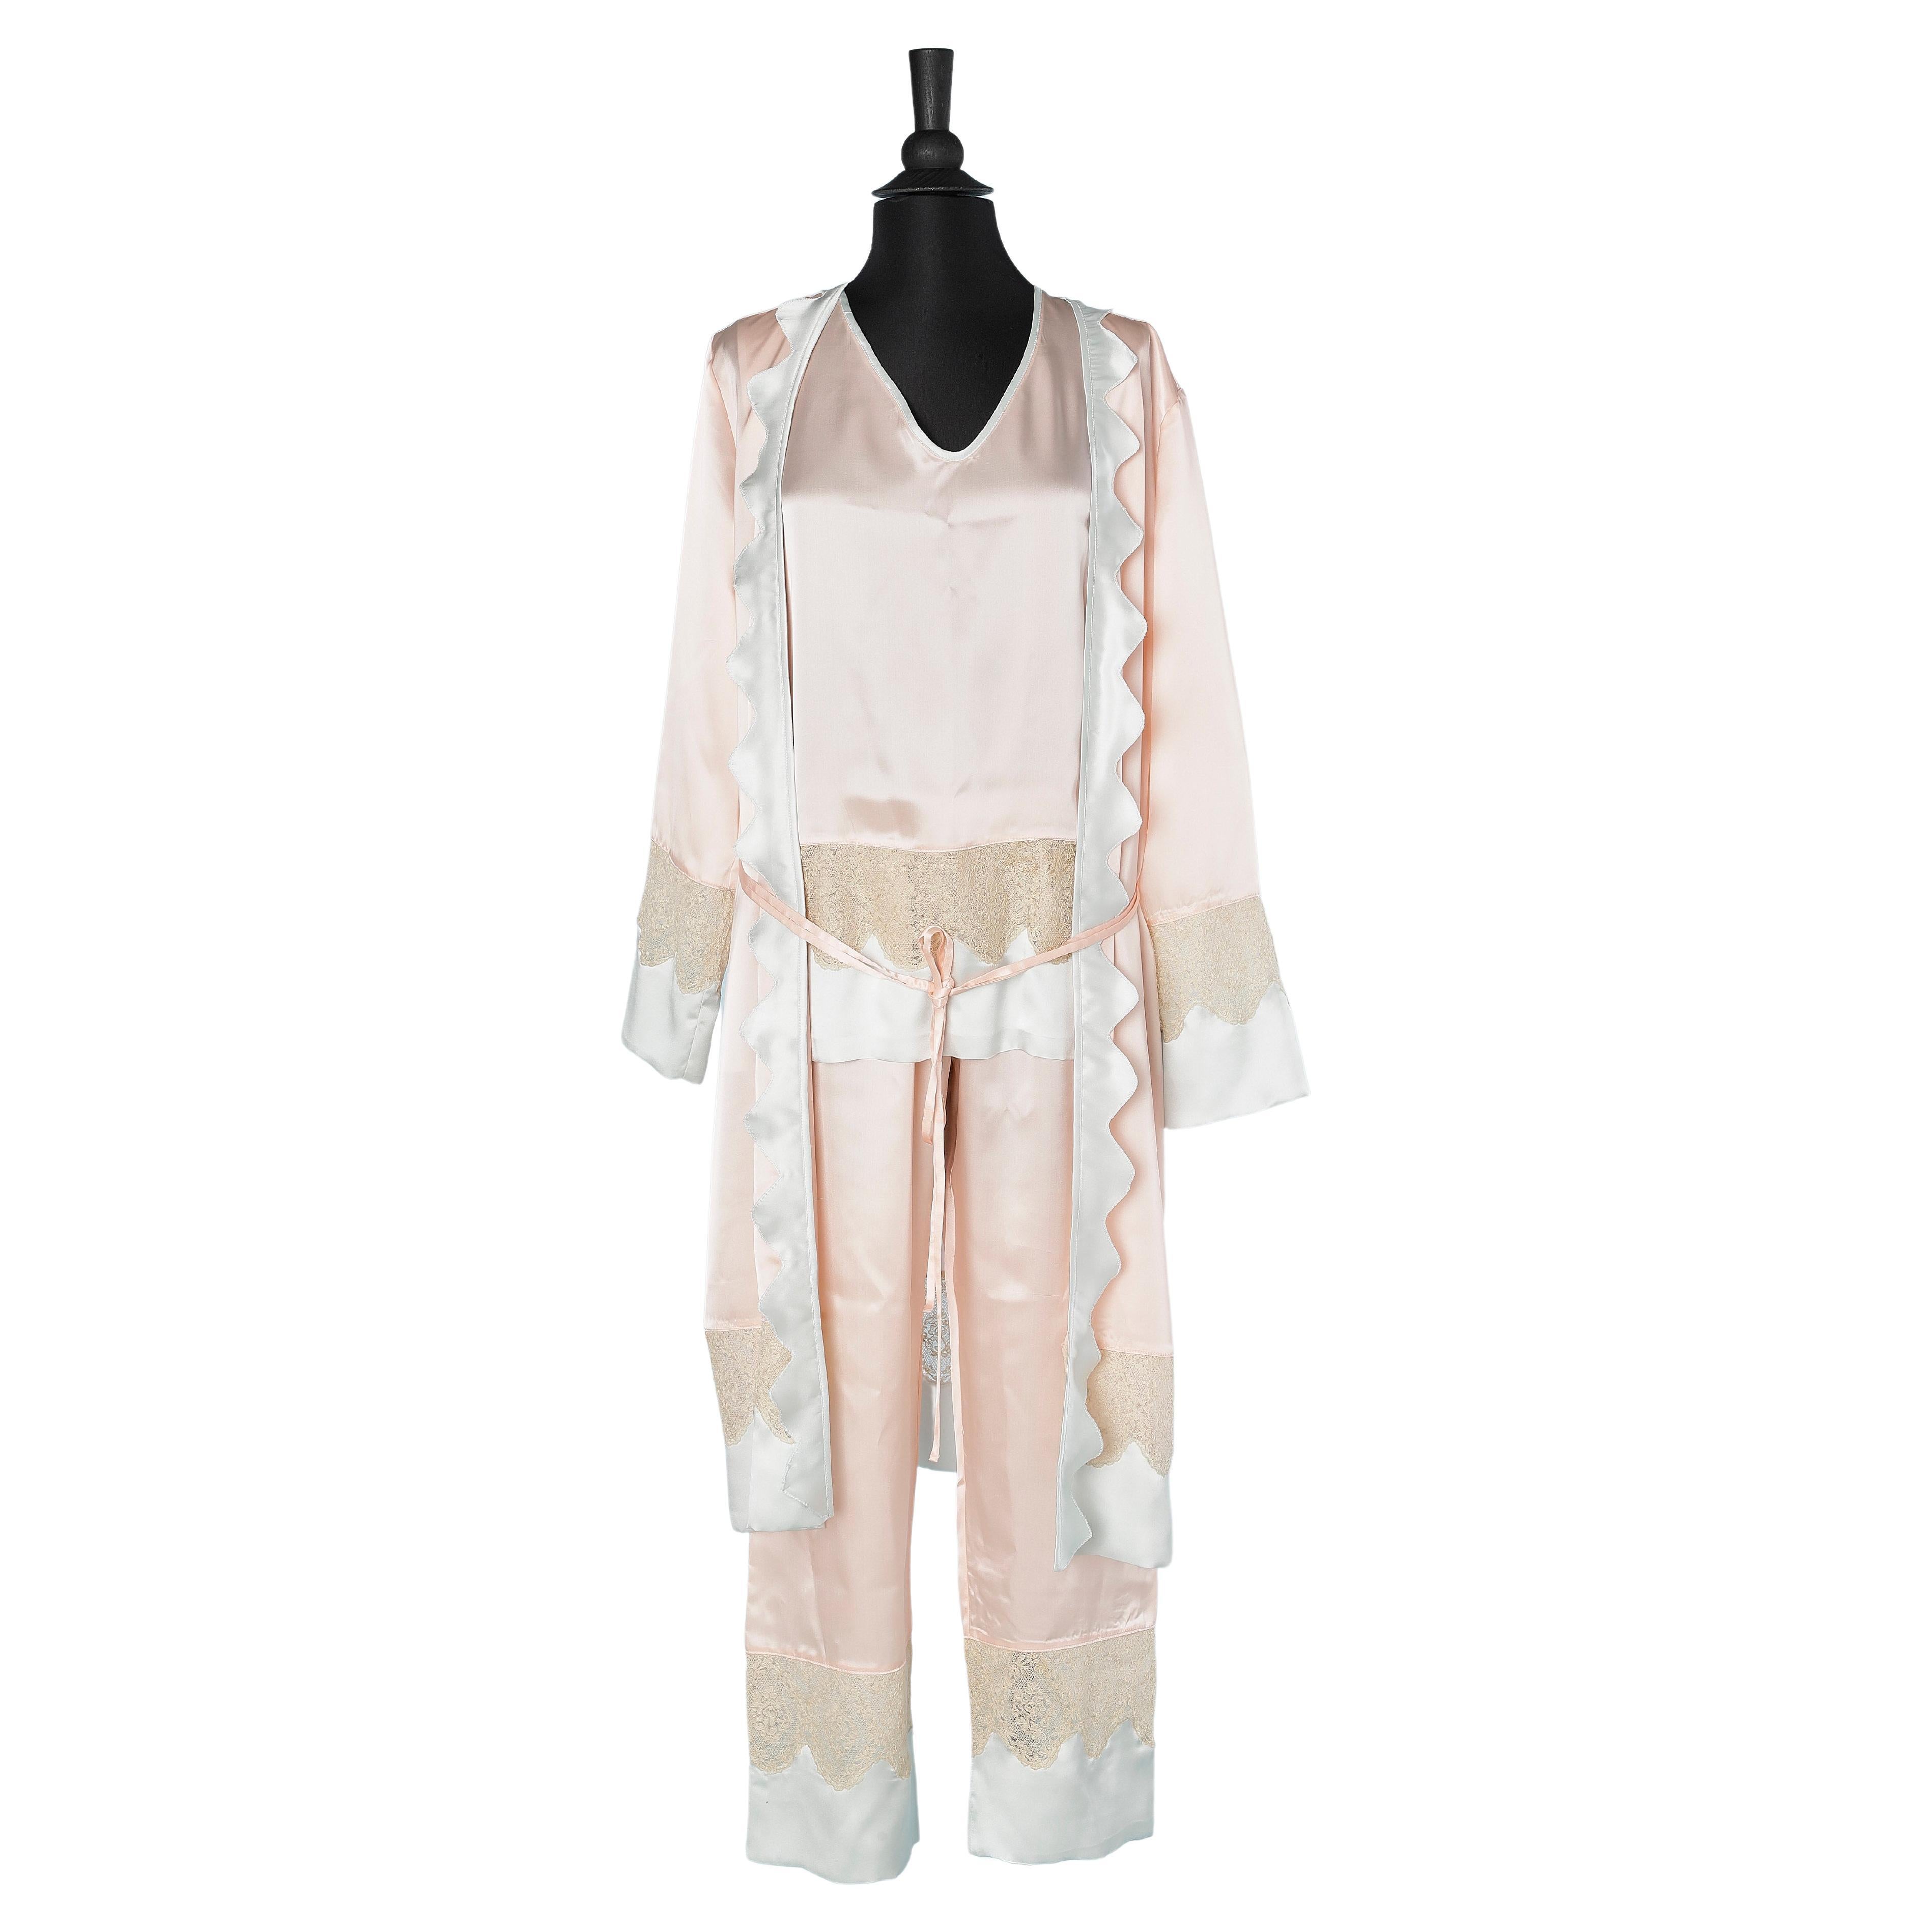 Robe and pyjamas in pastel silk satin and lace appliqué  Circa 1930